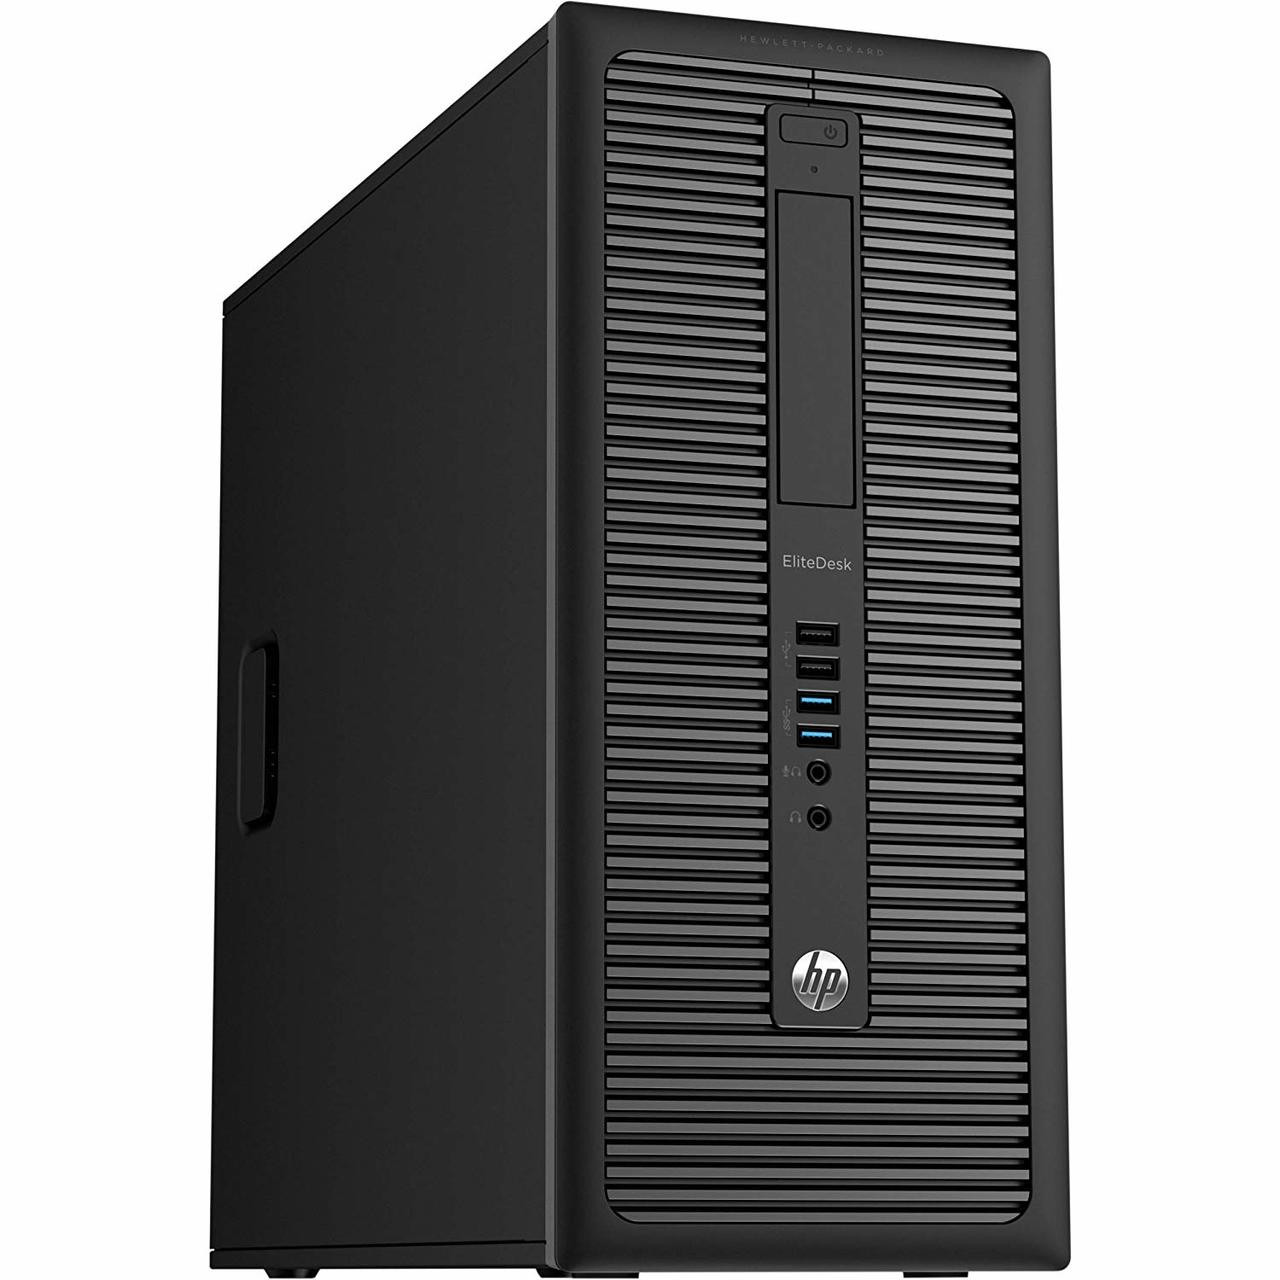 HP 800 G1 EliteDesk Tower Computer PC i7-4770 Quad 3.40GHz 8GB 1TB